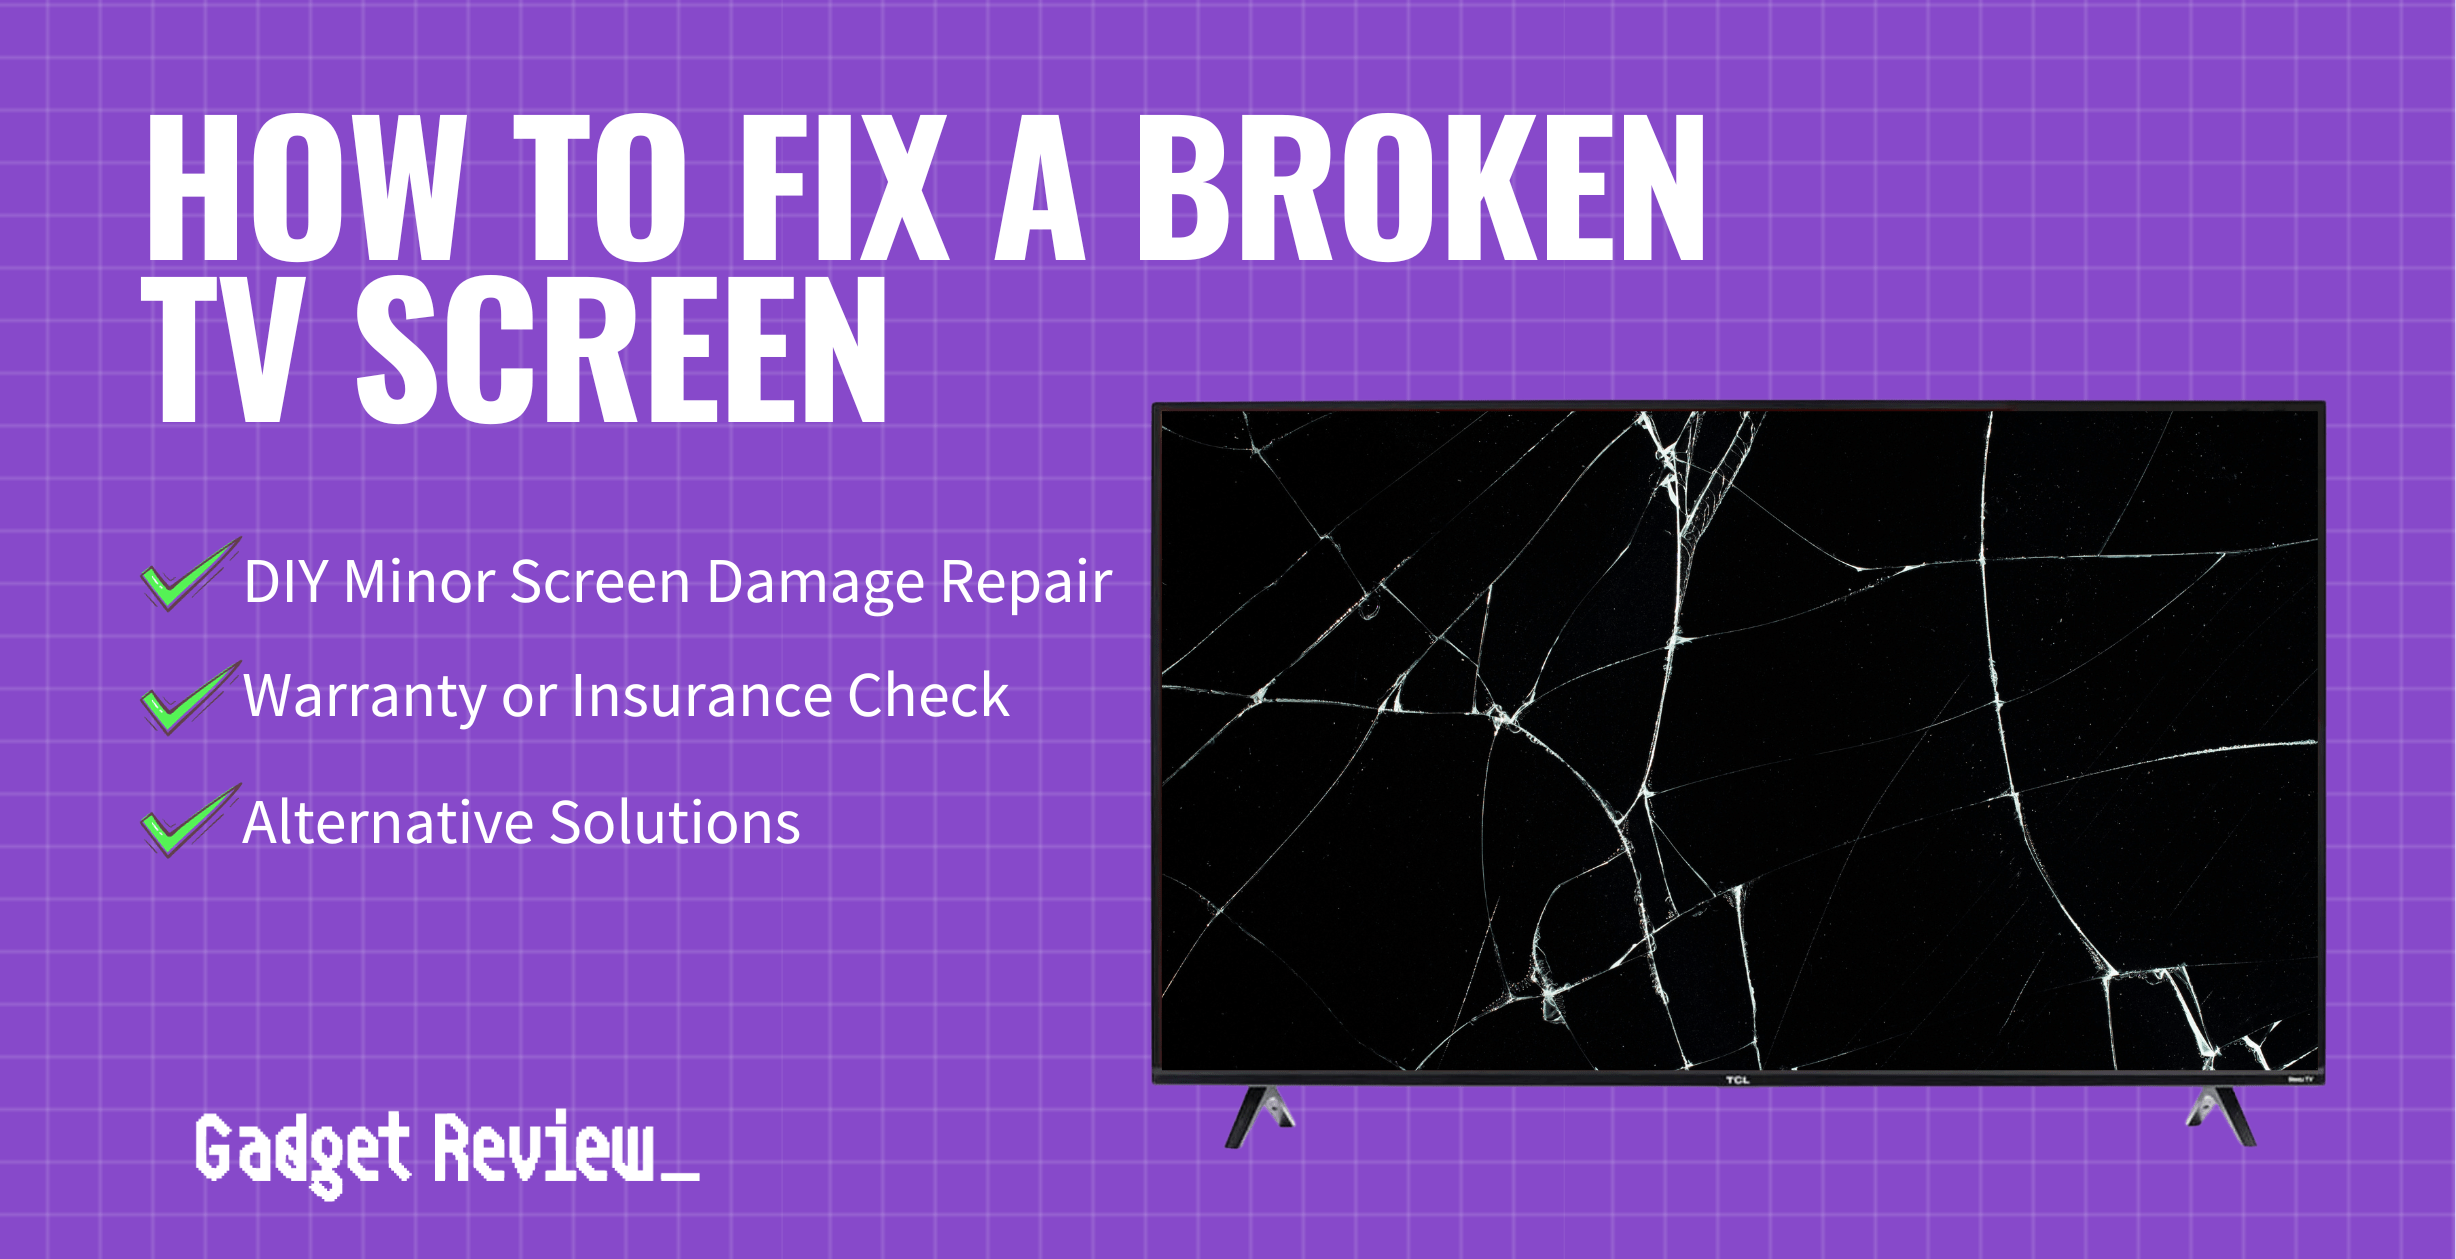 how to fix a broken tv screen guide